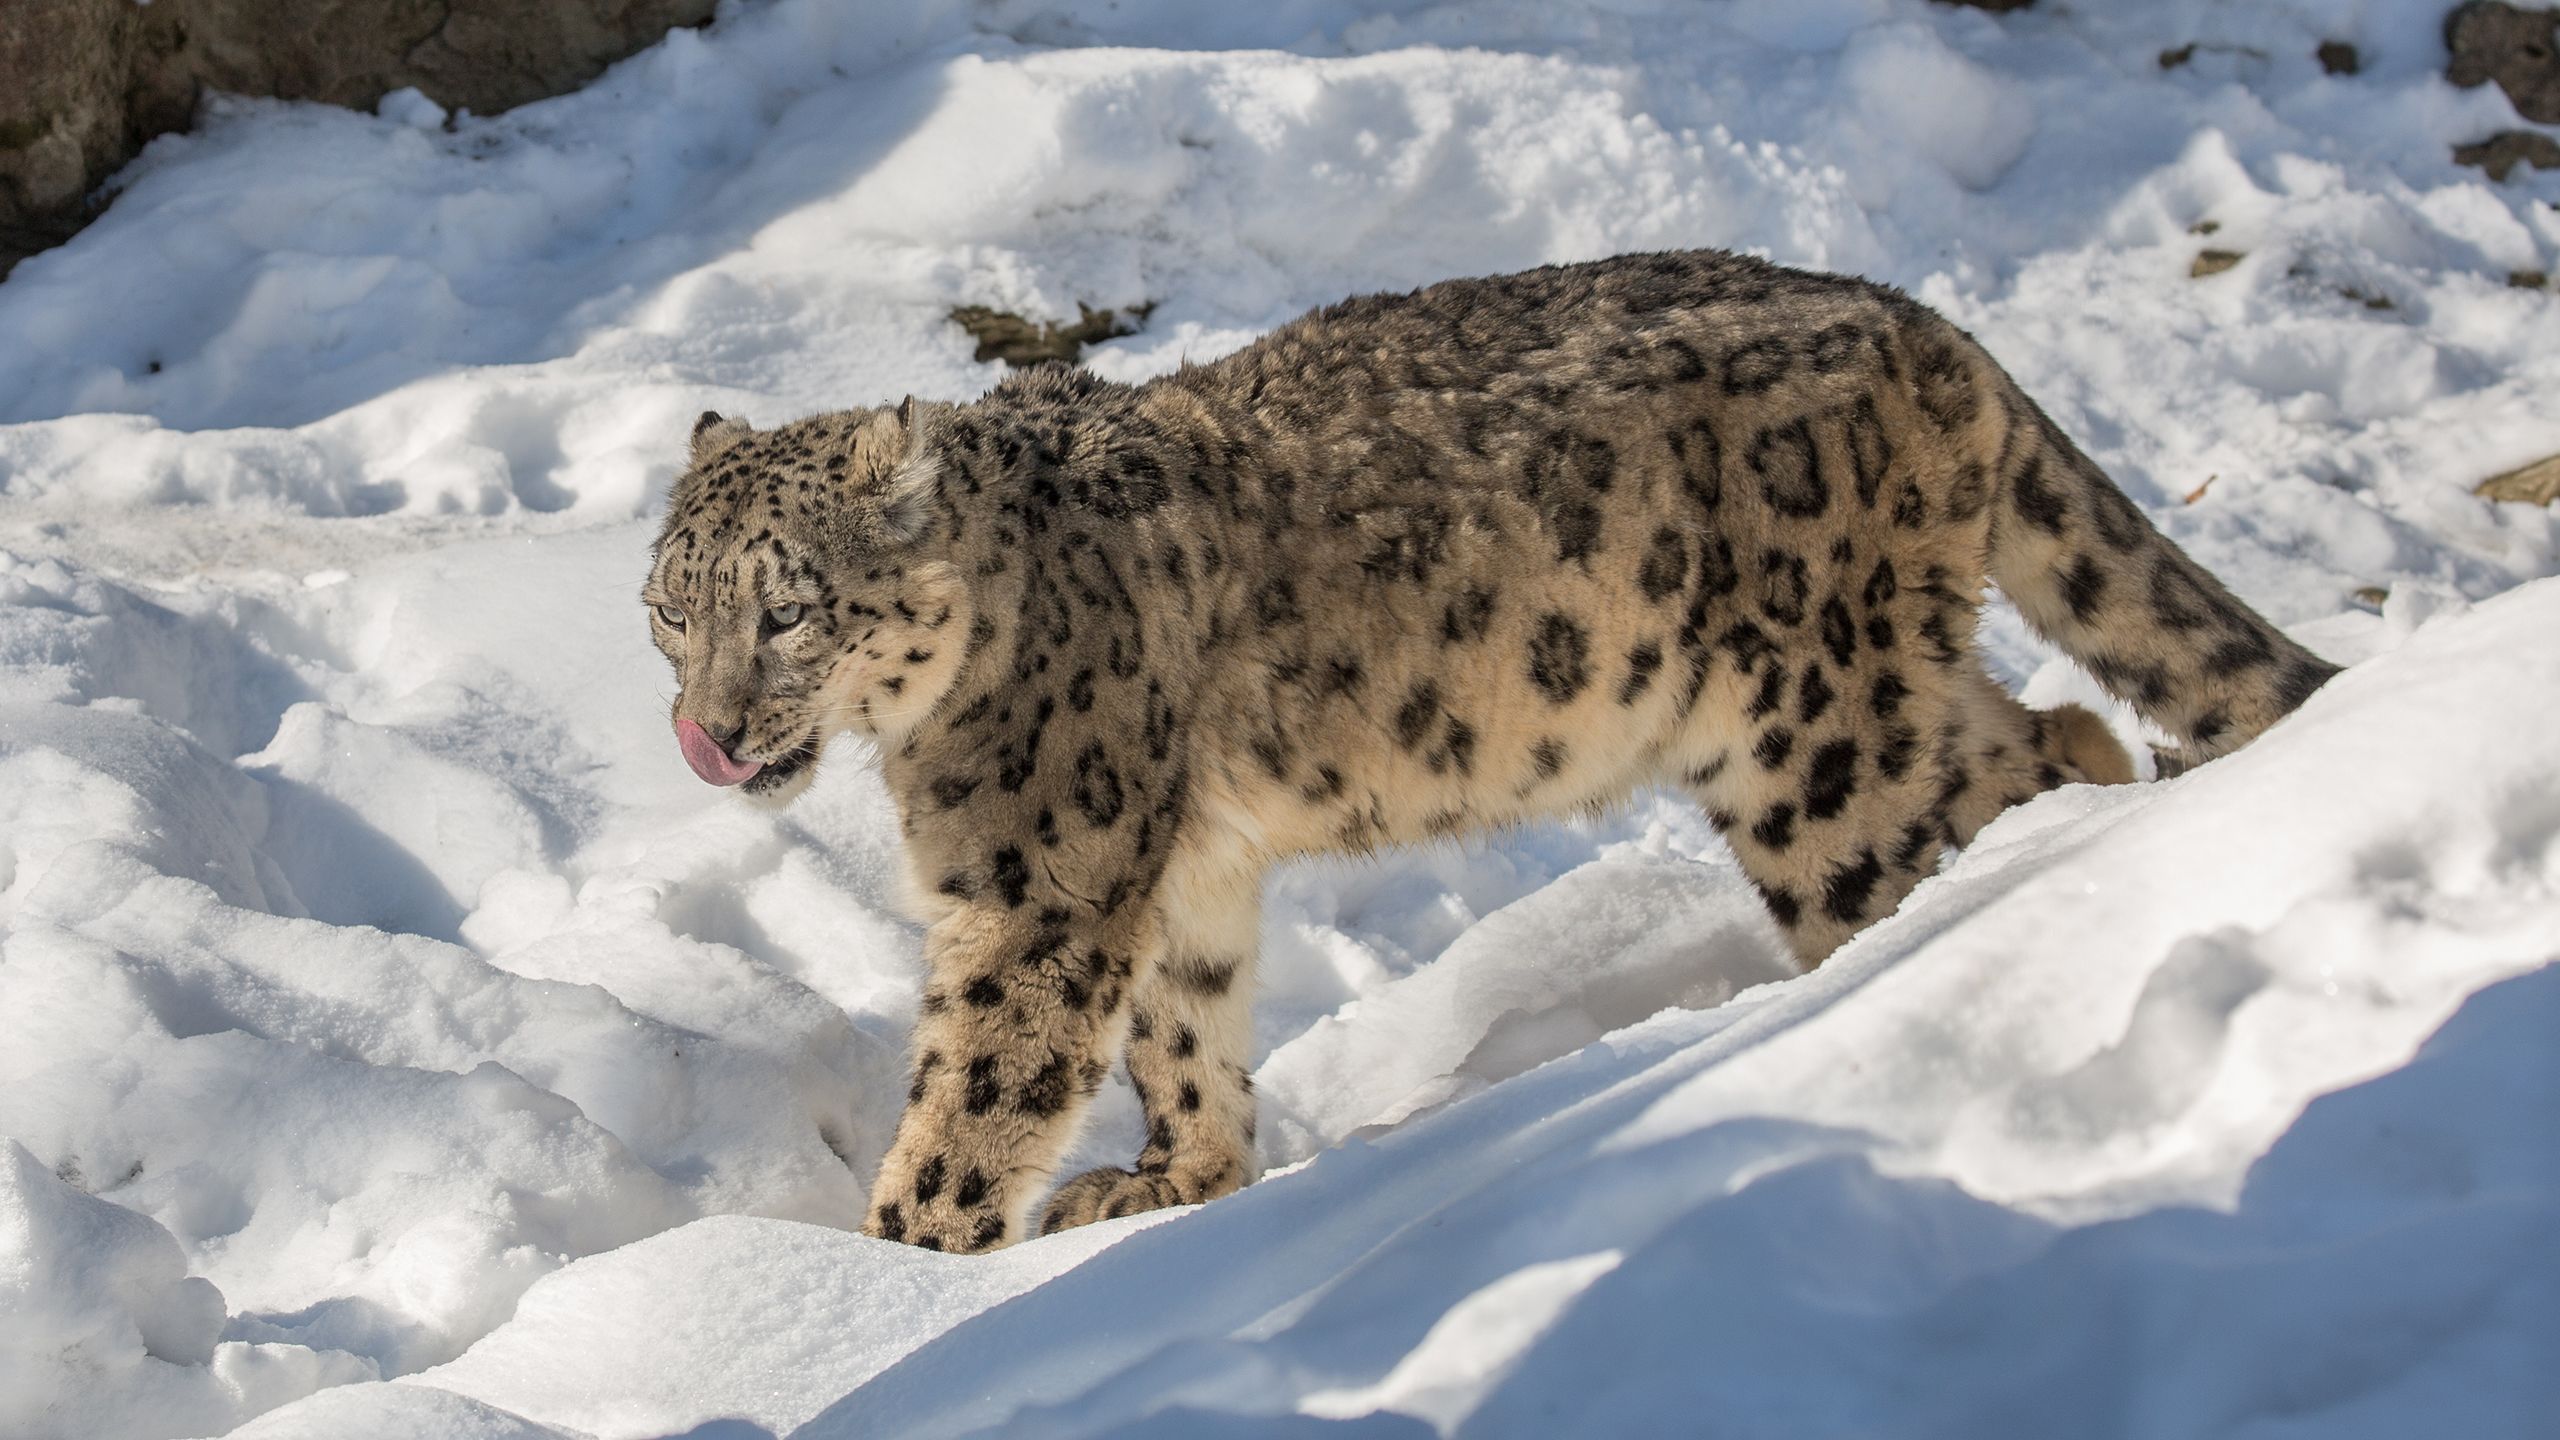 Snow leopard photograph by Daniel Muenger